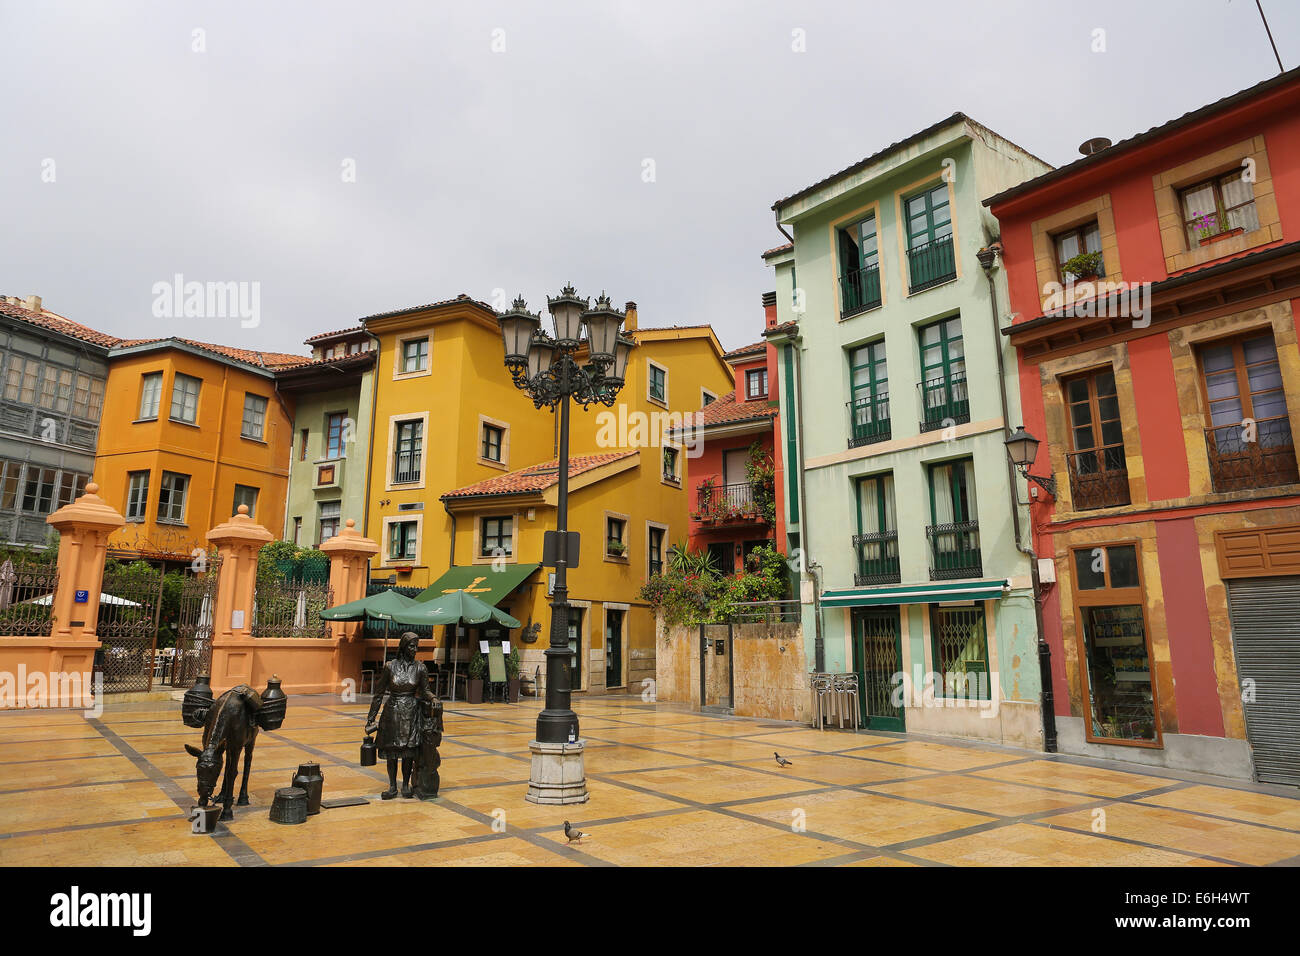 OVIEDO, Spagna - 17 luglio 2014: Plaza Trascorrales nel centro di Oviedo, Asturias, Spagna. Foto Stock